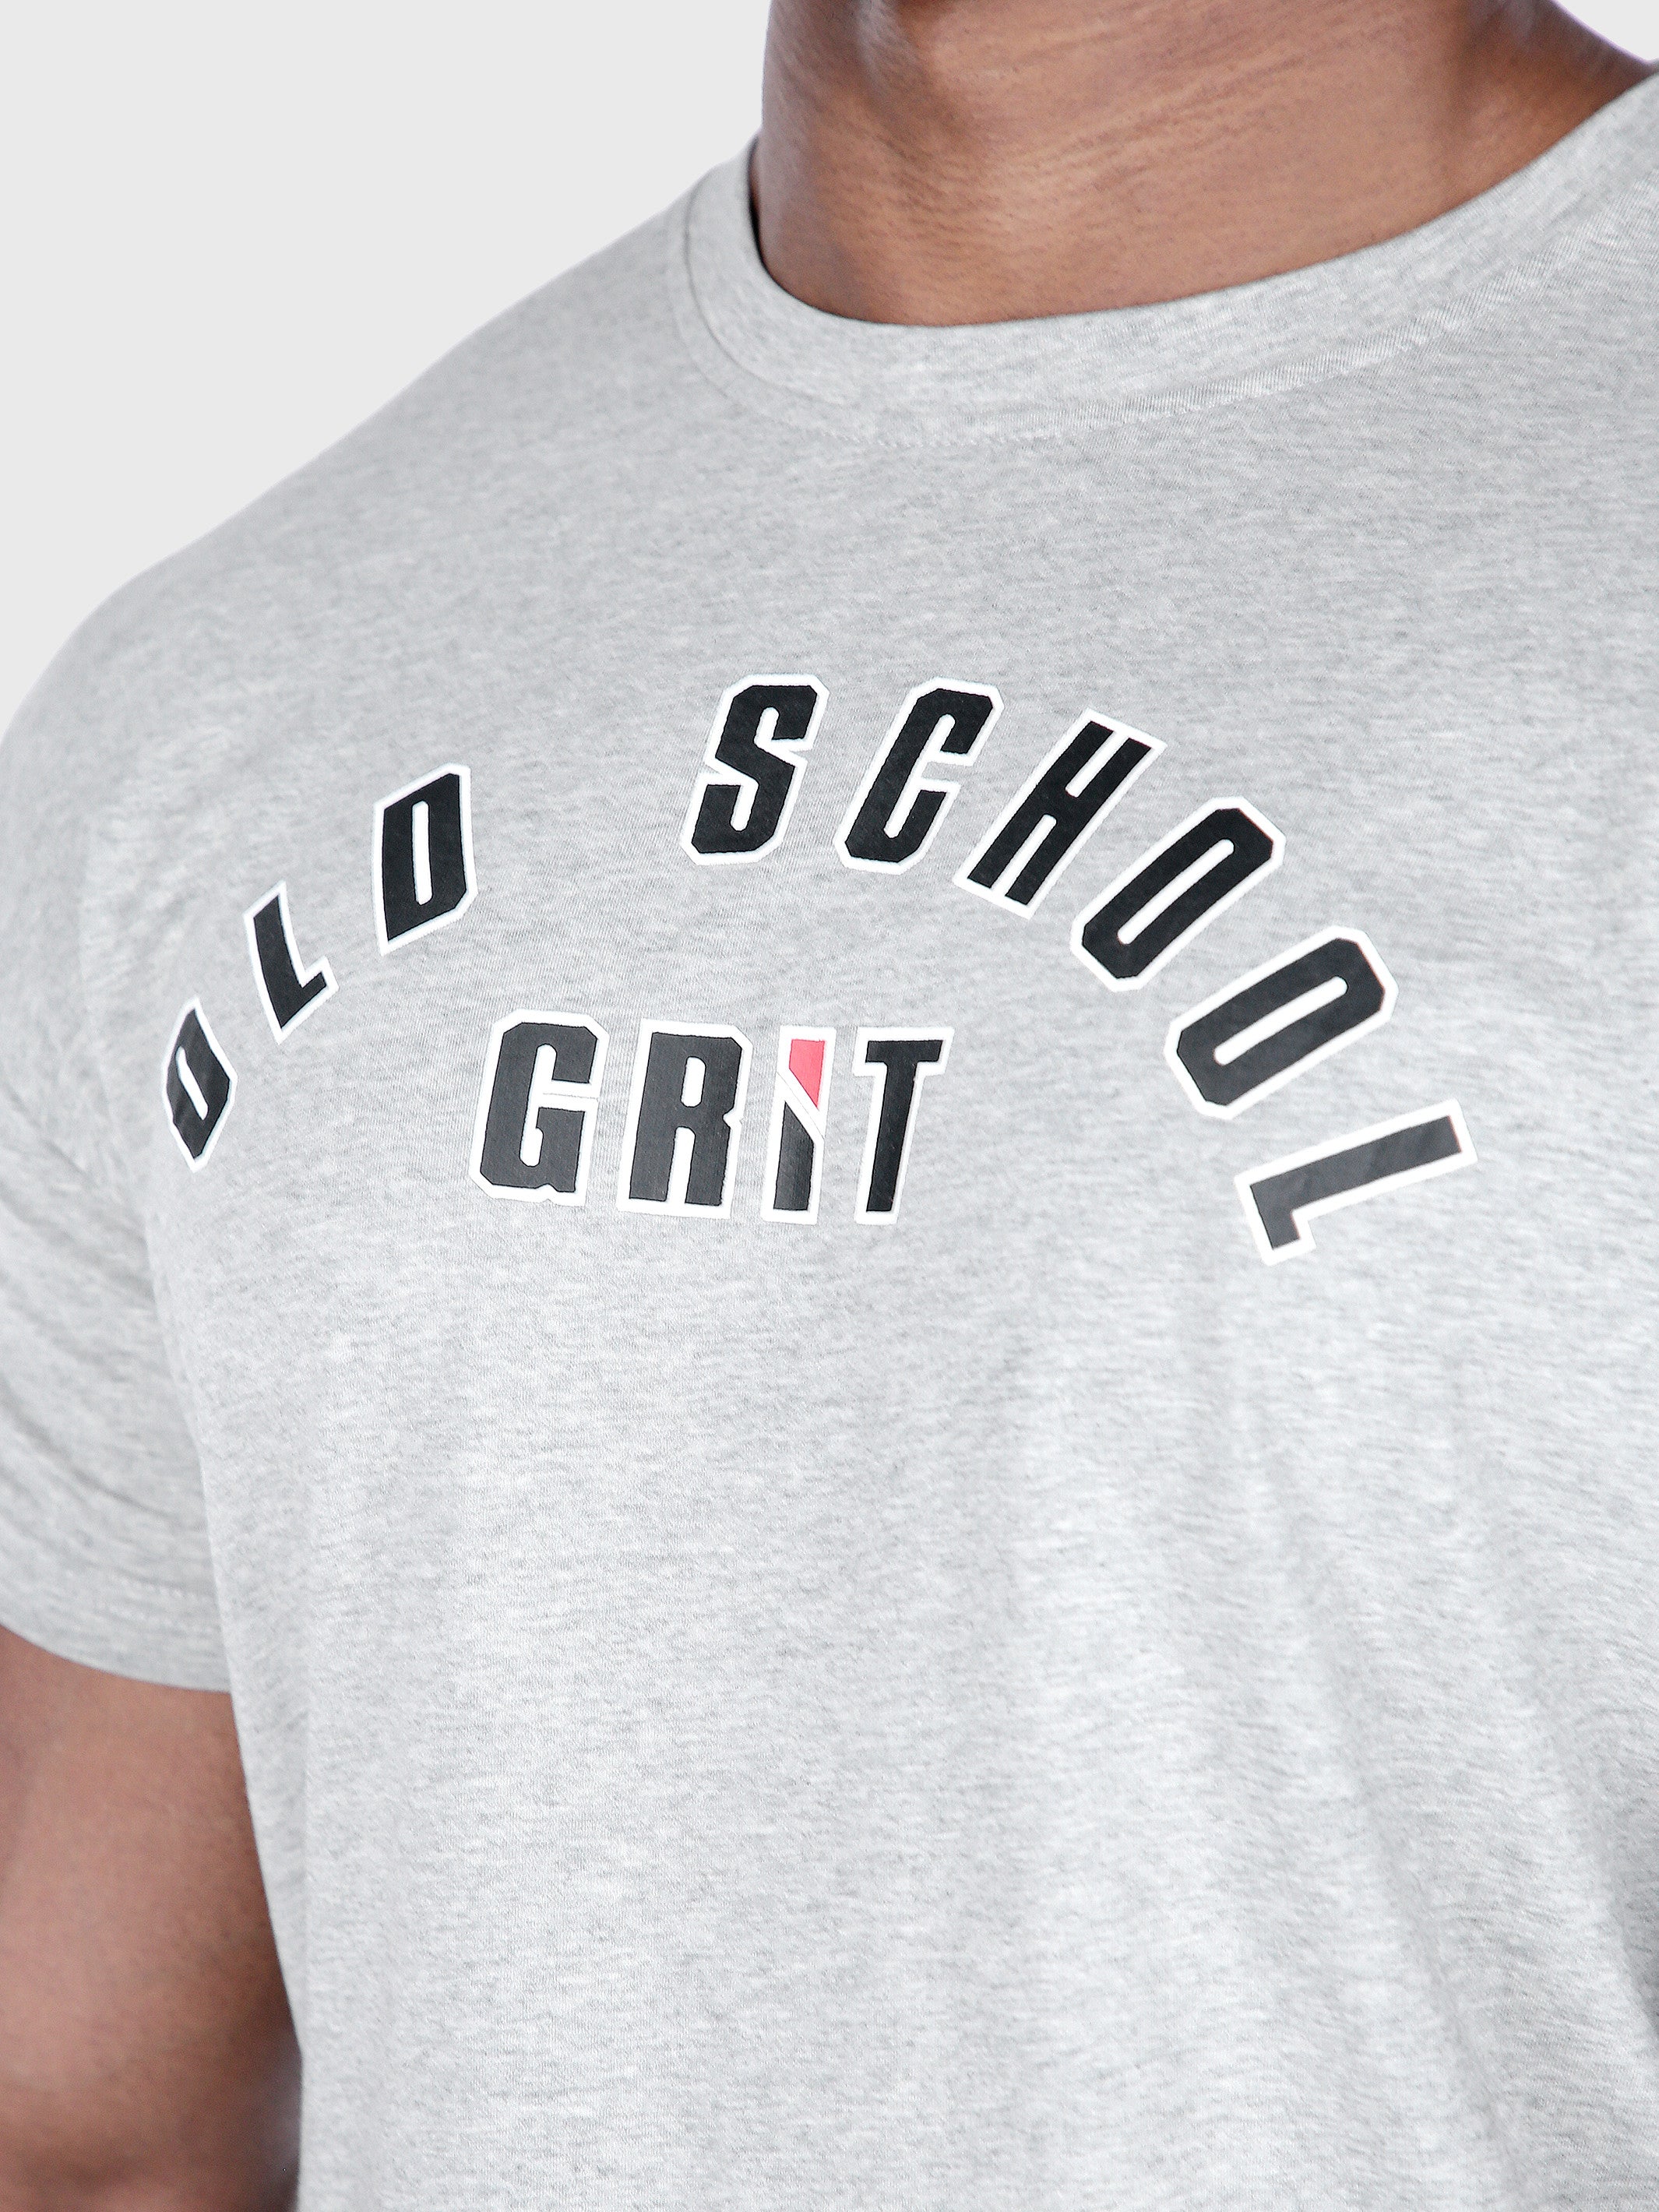 Grit T-Shirt - Men from Genejack for Genejack WOD